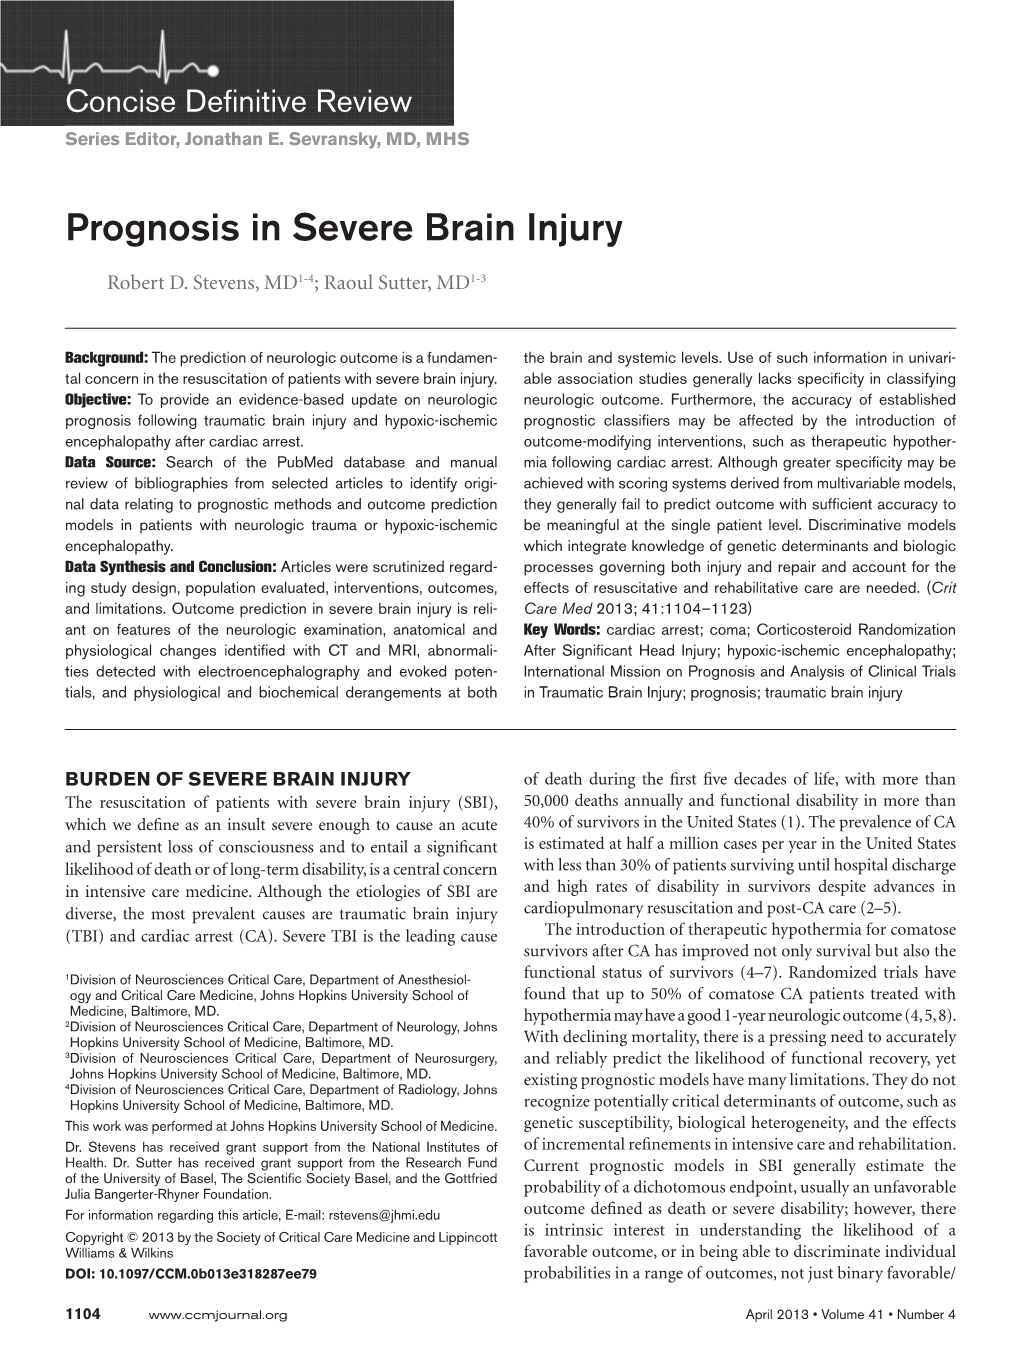 Prognosis in Severe Brain Injury CCM Robert D